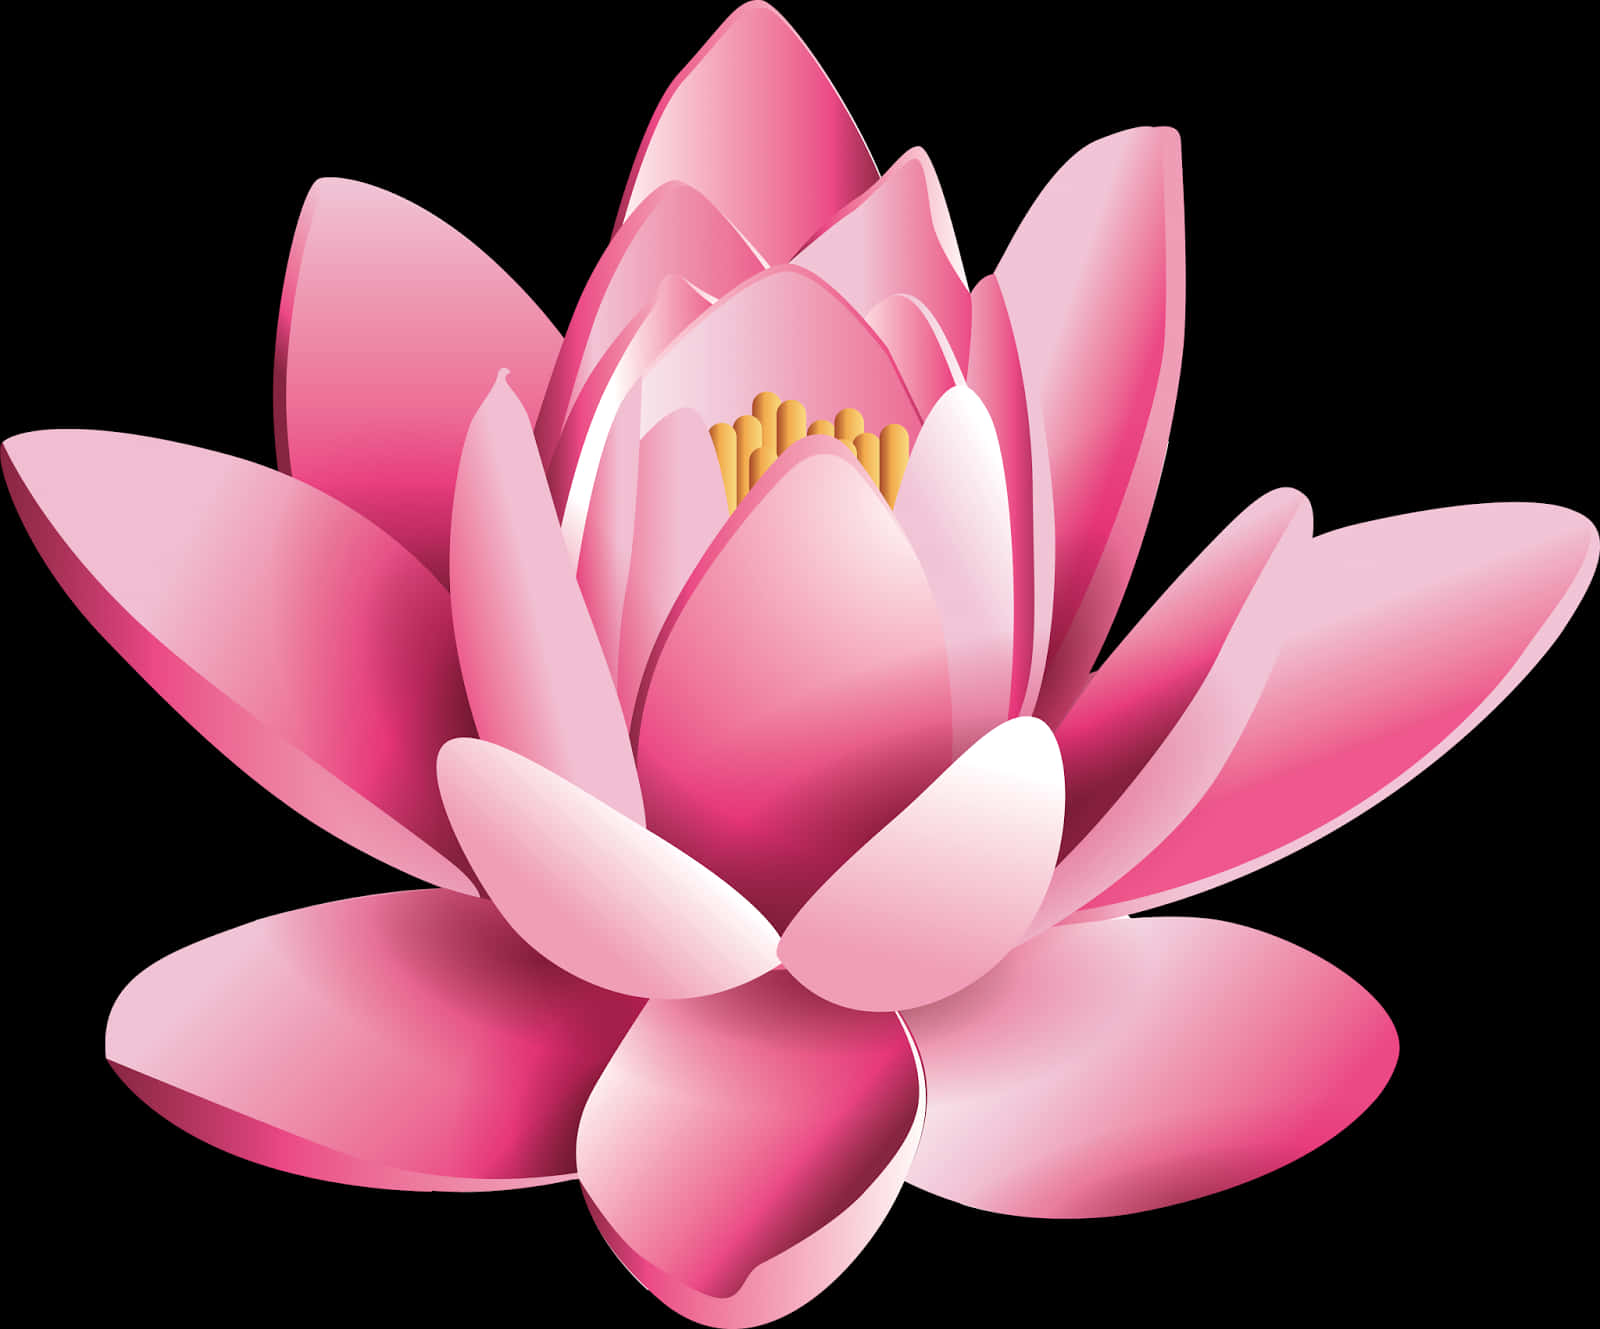 Pink Lotus Flower Illustration PNG image